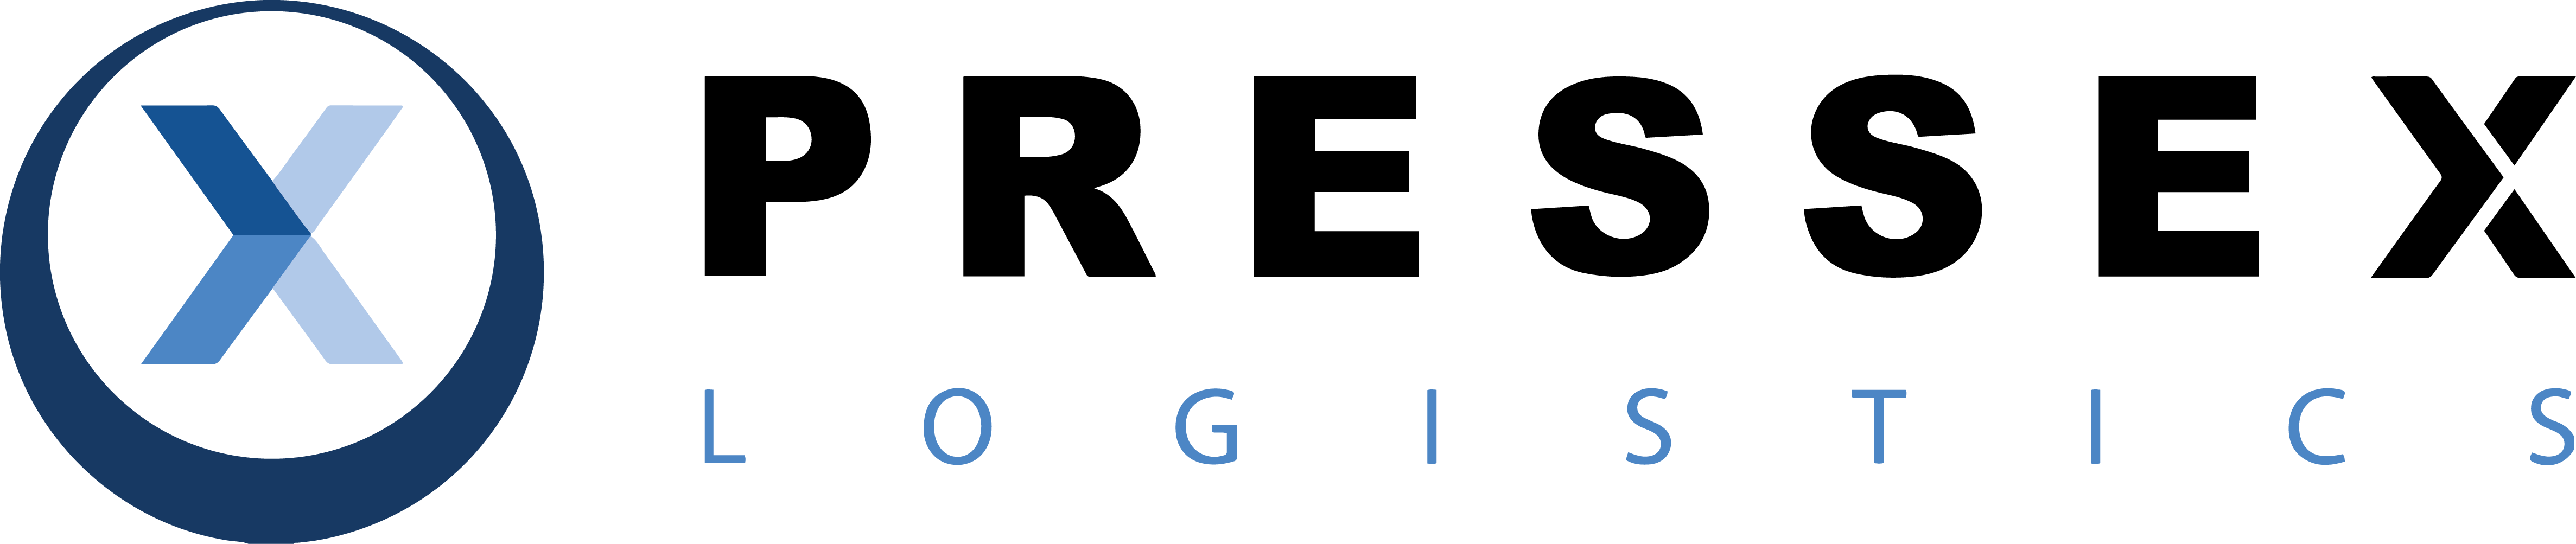 Logo of Excel Servicios Logisticos, C.A.